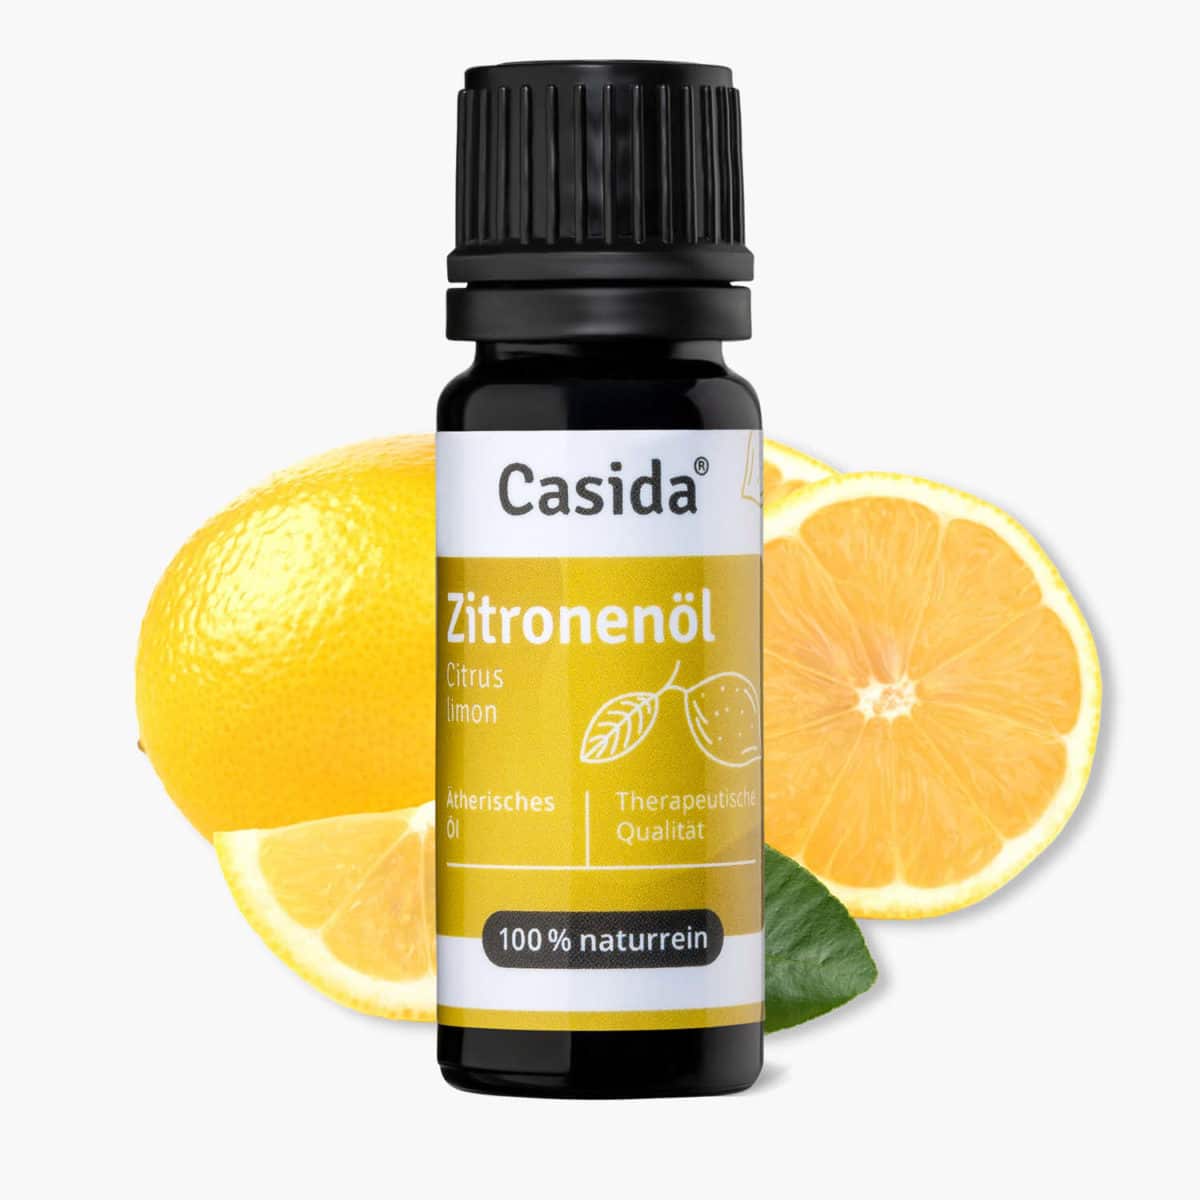 Casida Zitronenöl Citrus limon naturrein – 10 ml 15880797 PZN Apotheke ätherische Öle Diffuser